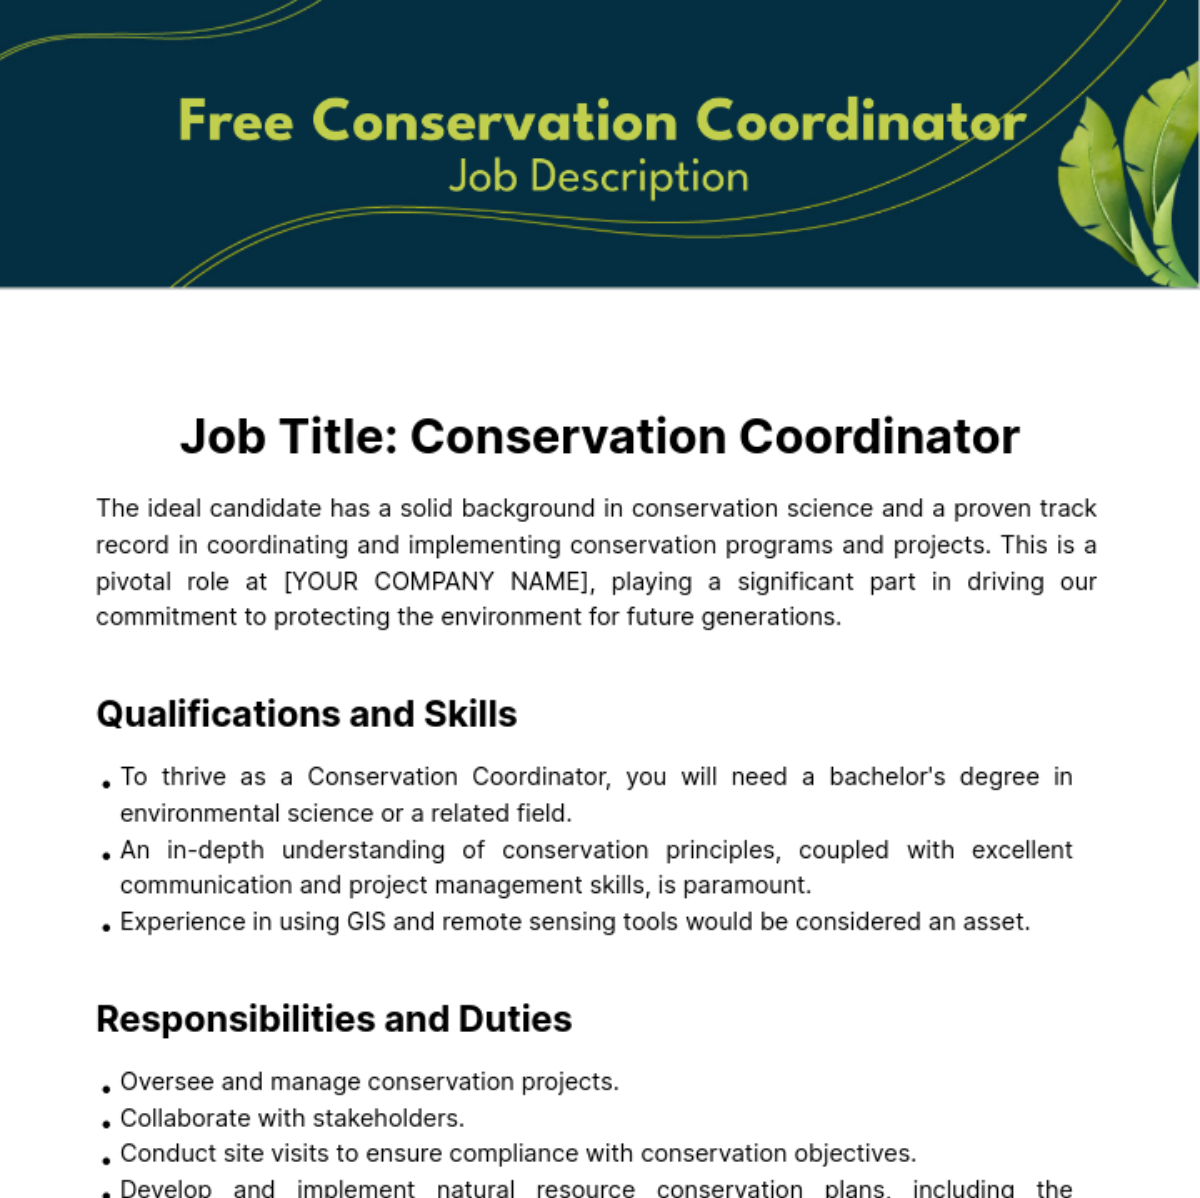 Free Conservation Coordinator Job Description Template